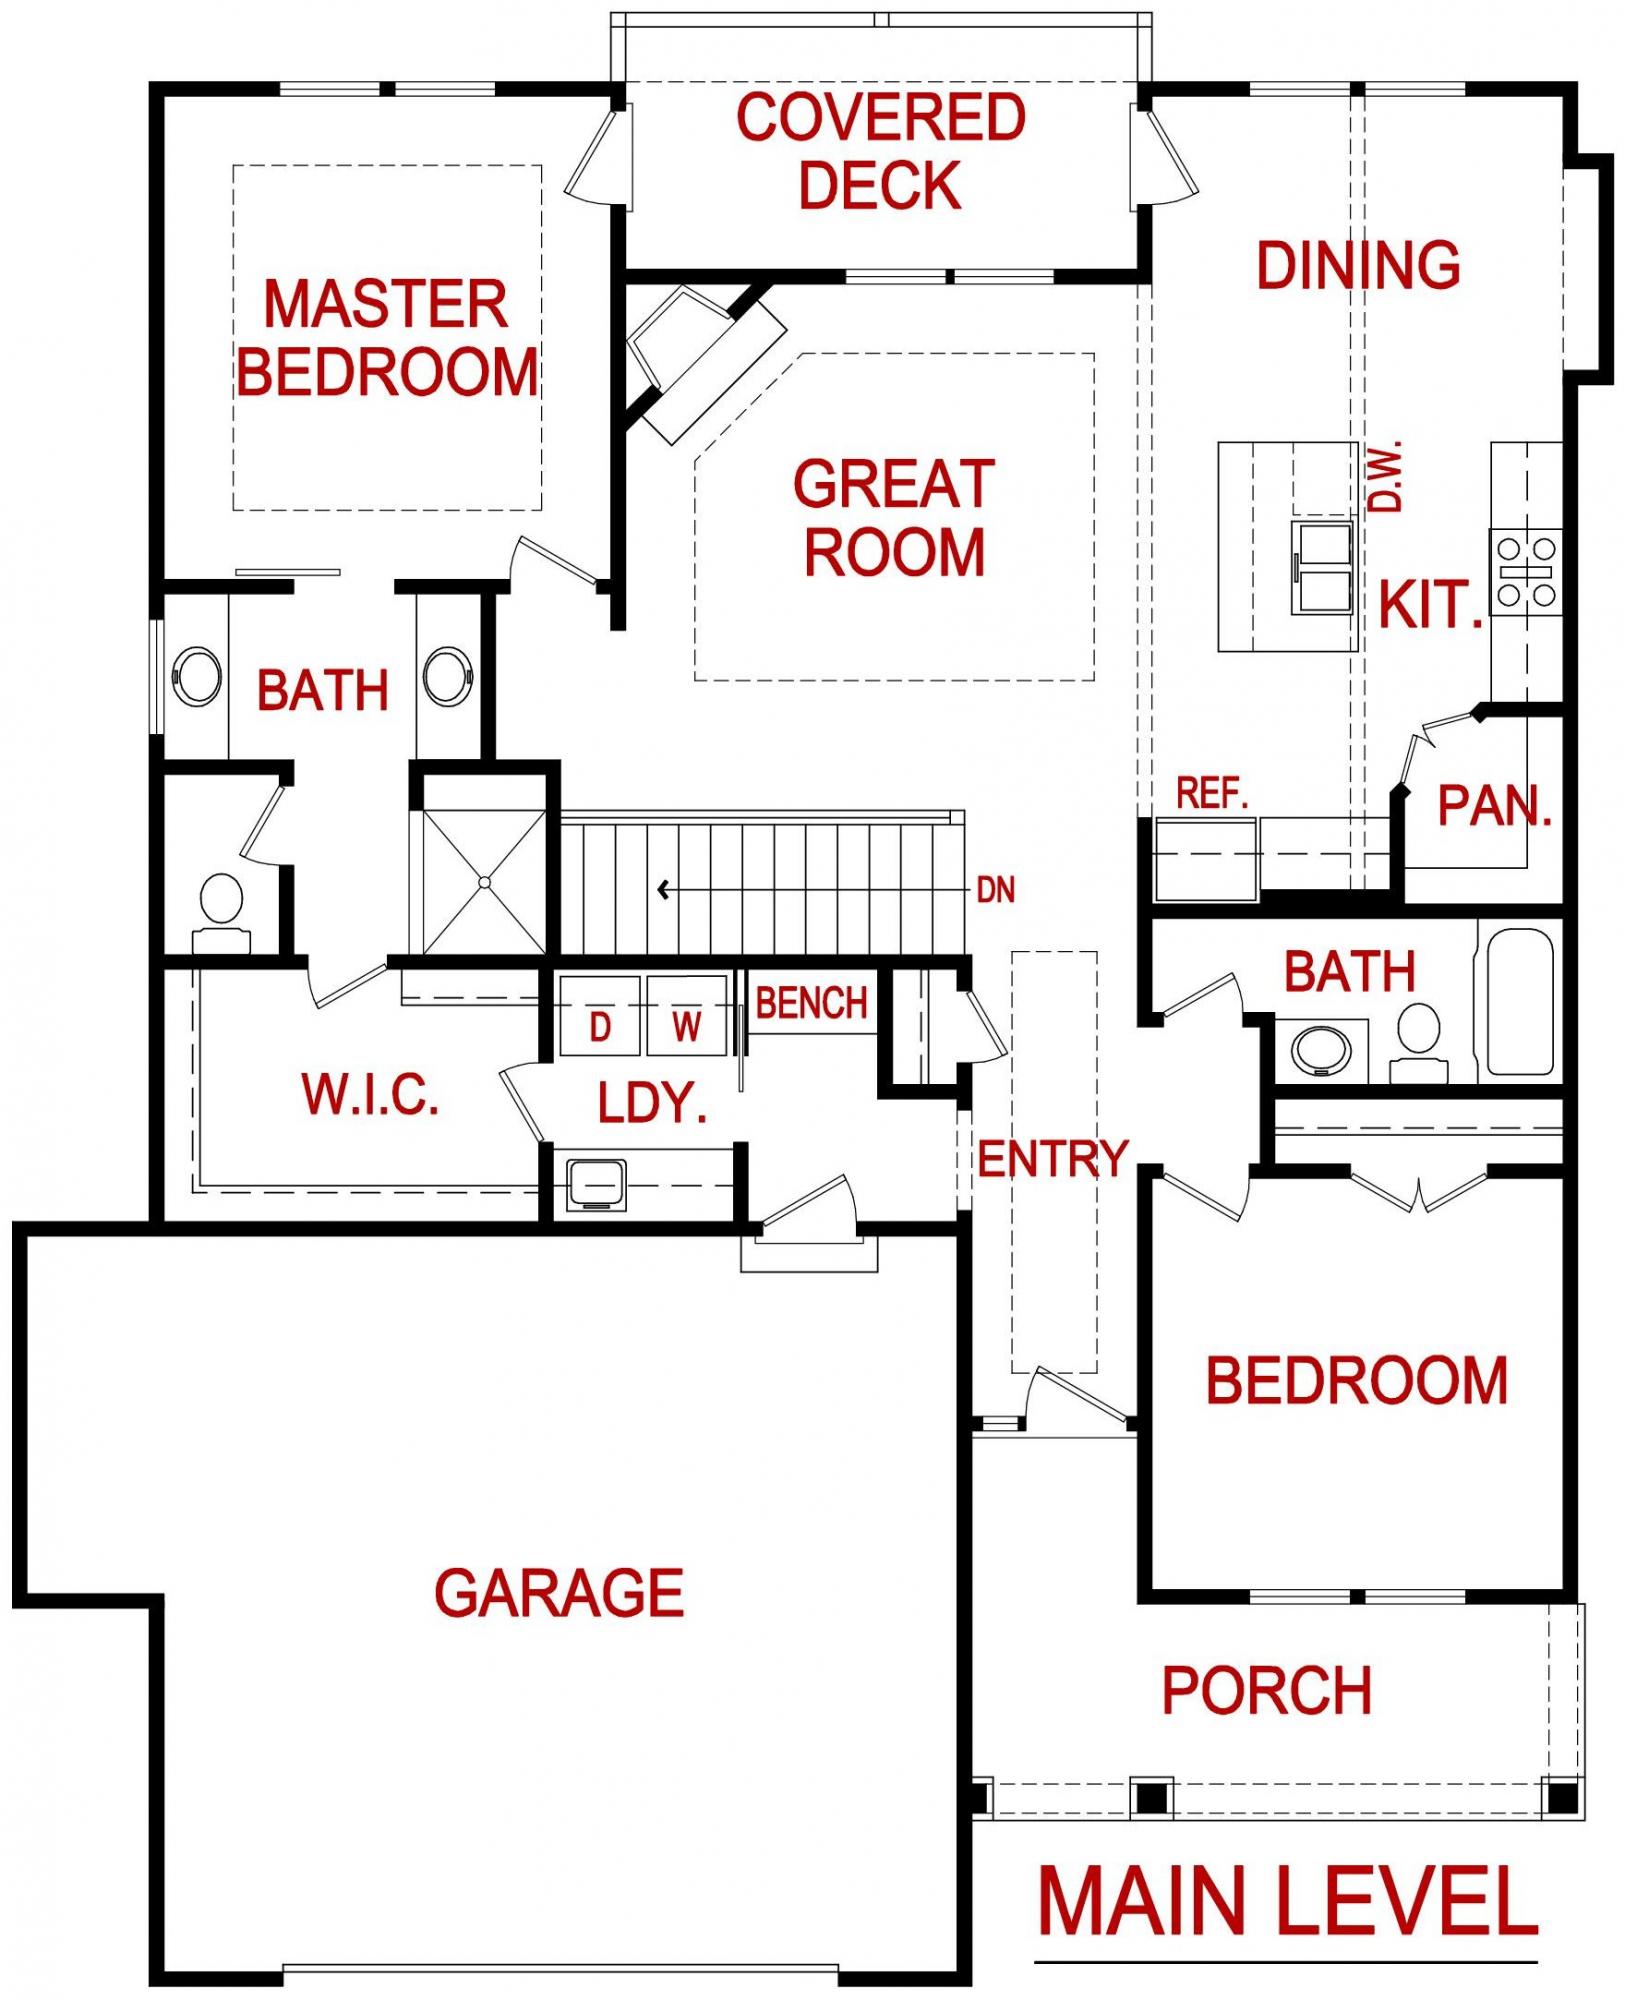 Main level floor plan for the ashberry model from Lambie custom homes